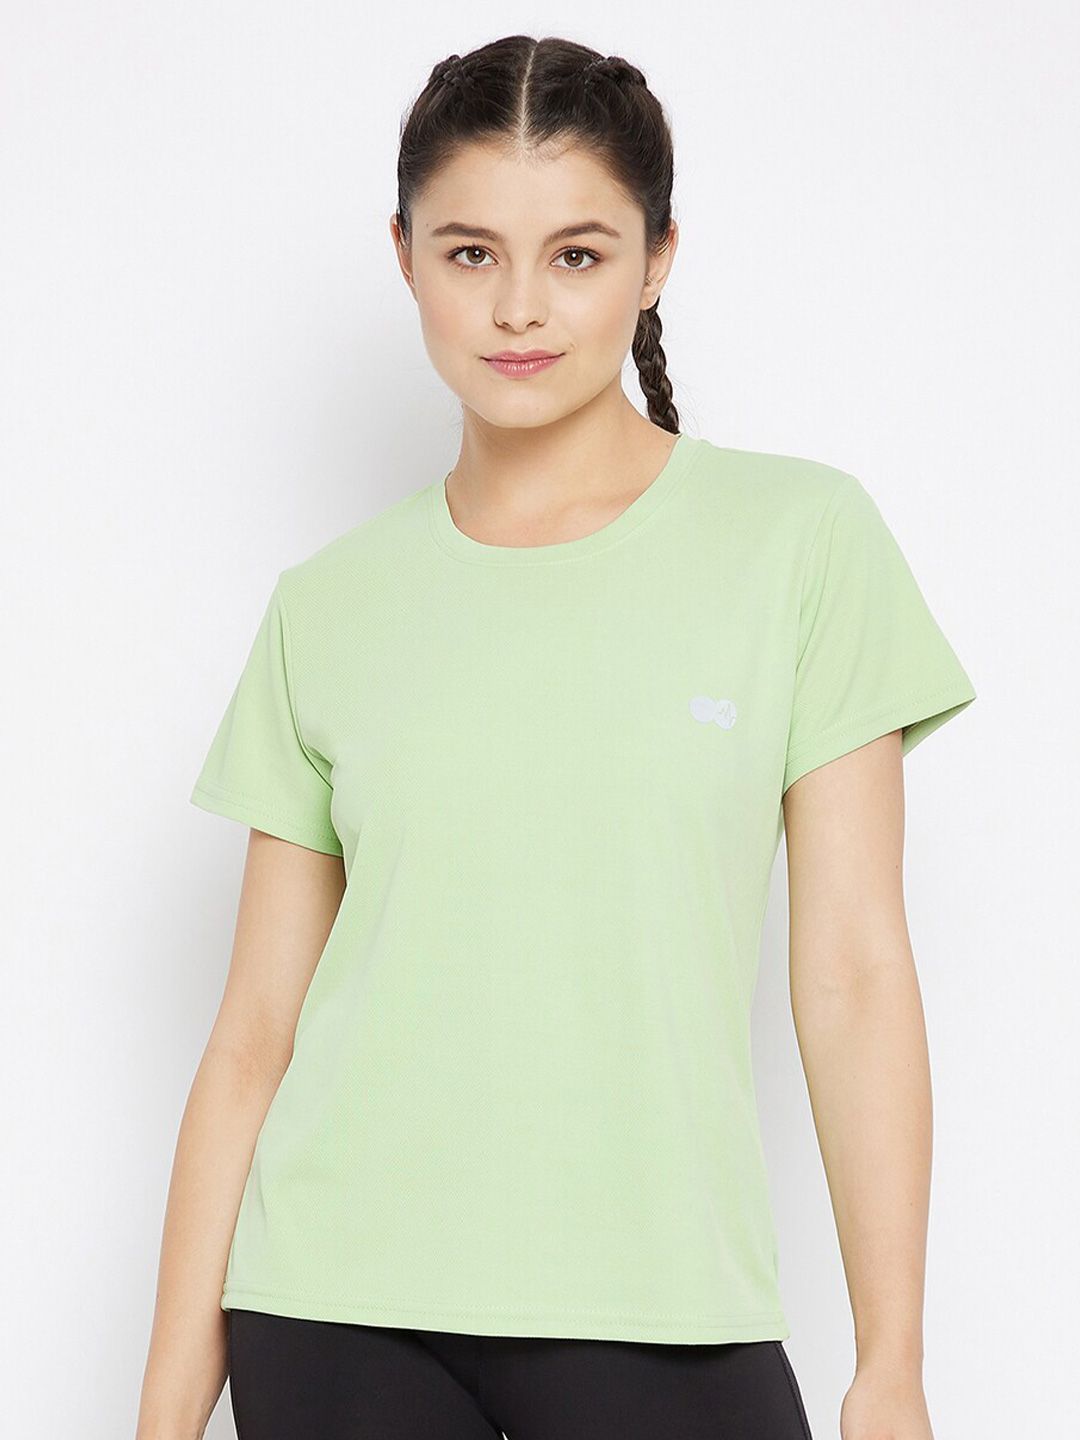 Clovia Women Green Solid T-shirt Price in India